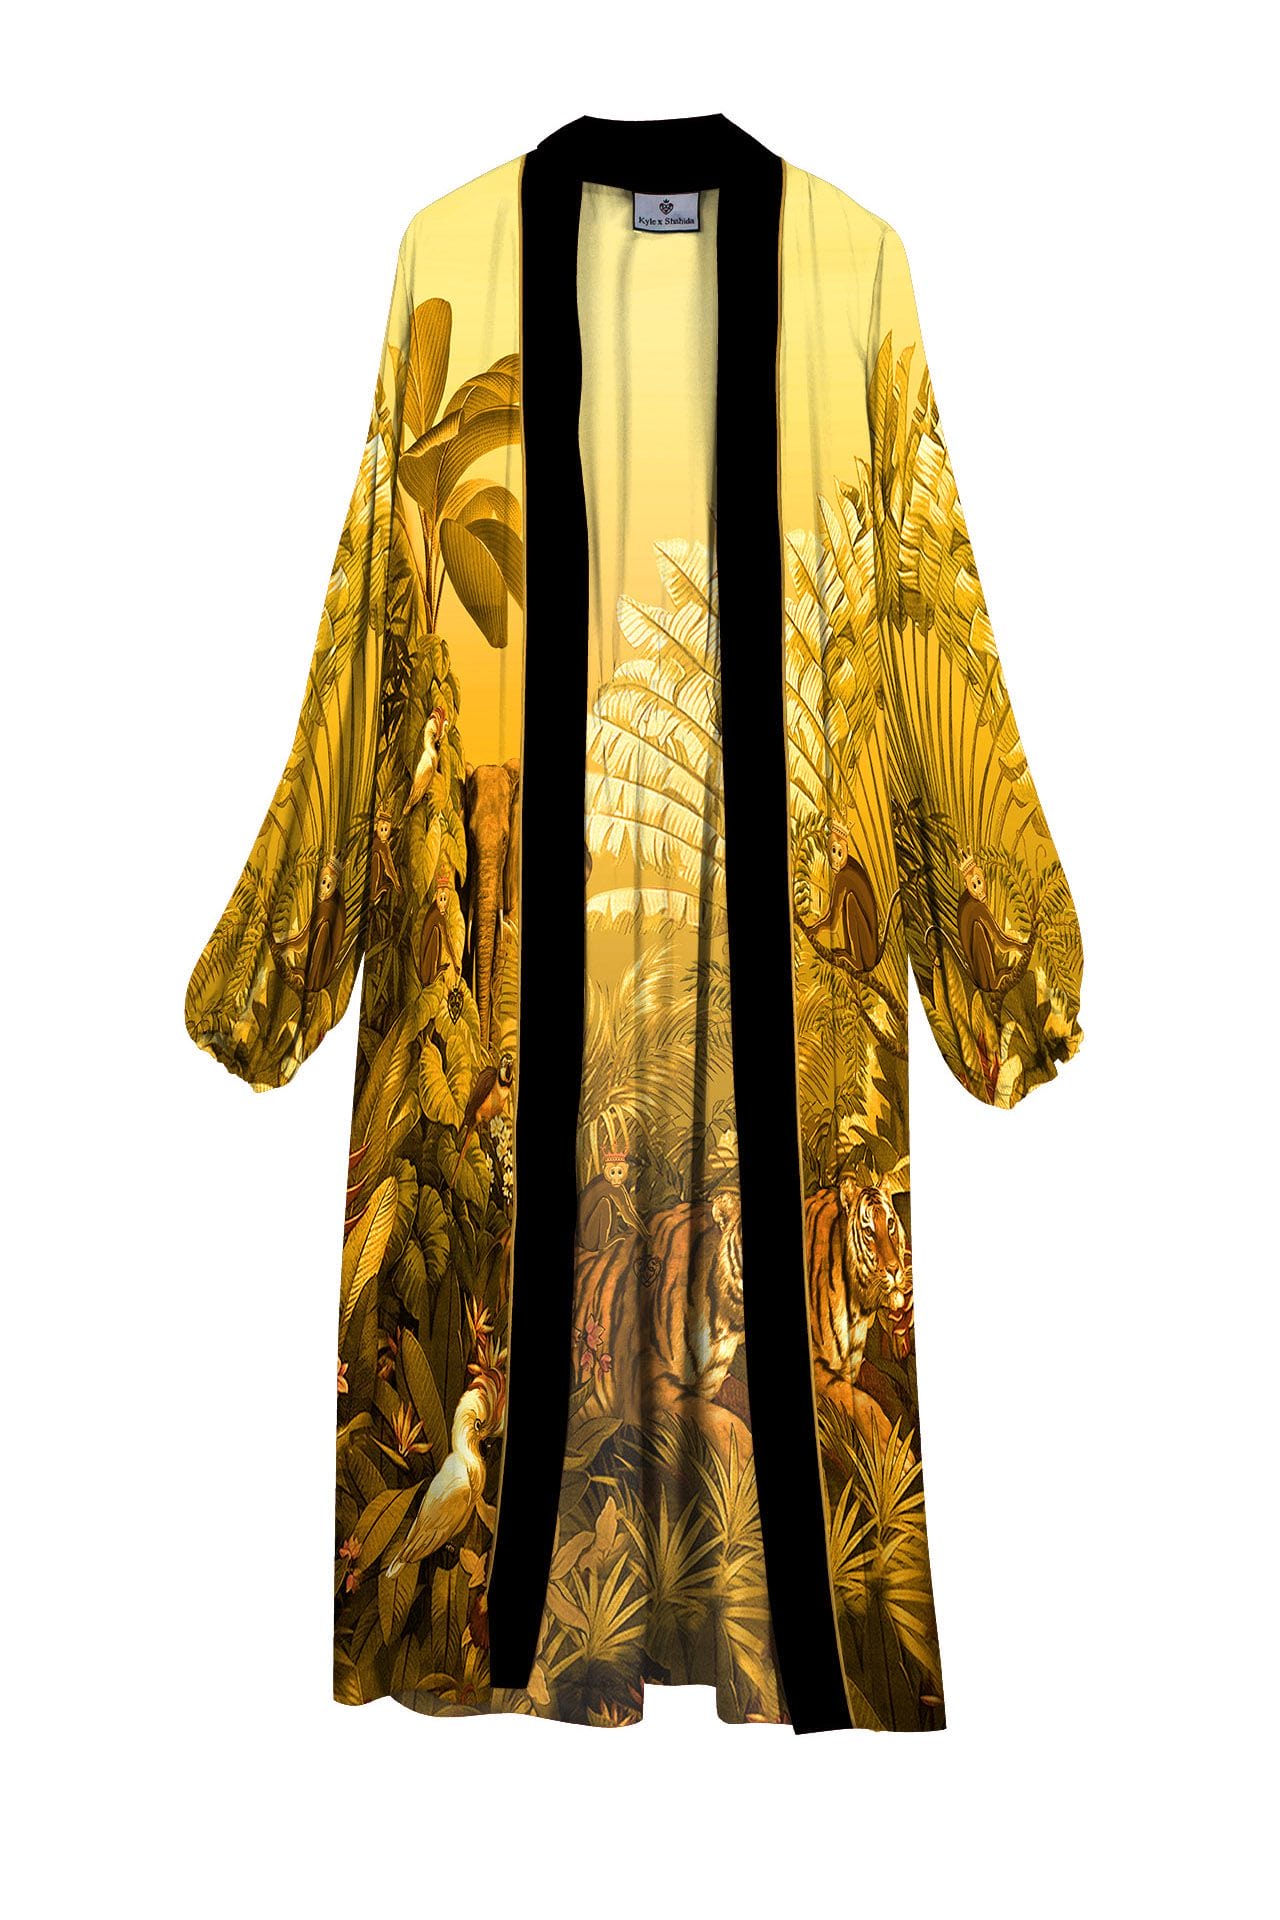 "yellow silk kimono" "Kyle X Shahida" "womens long kimono" "luxury kimono" "womens kimono robes"